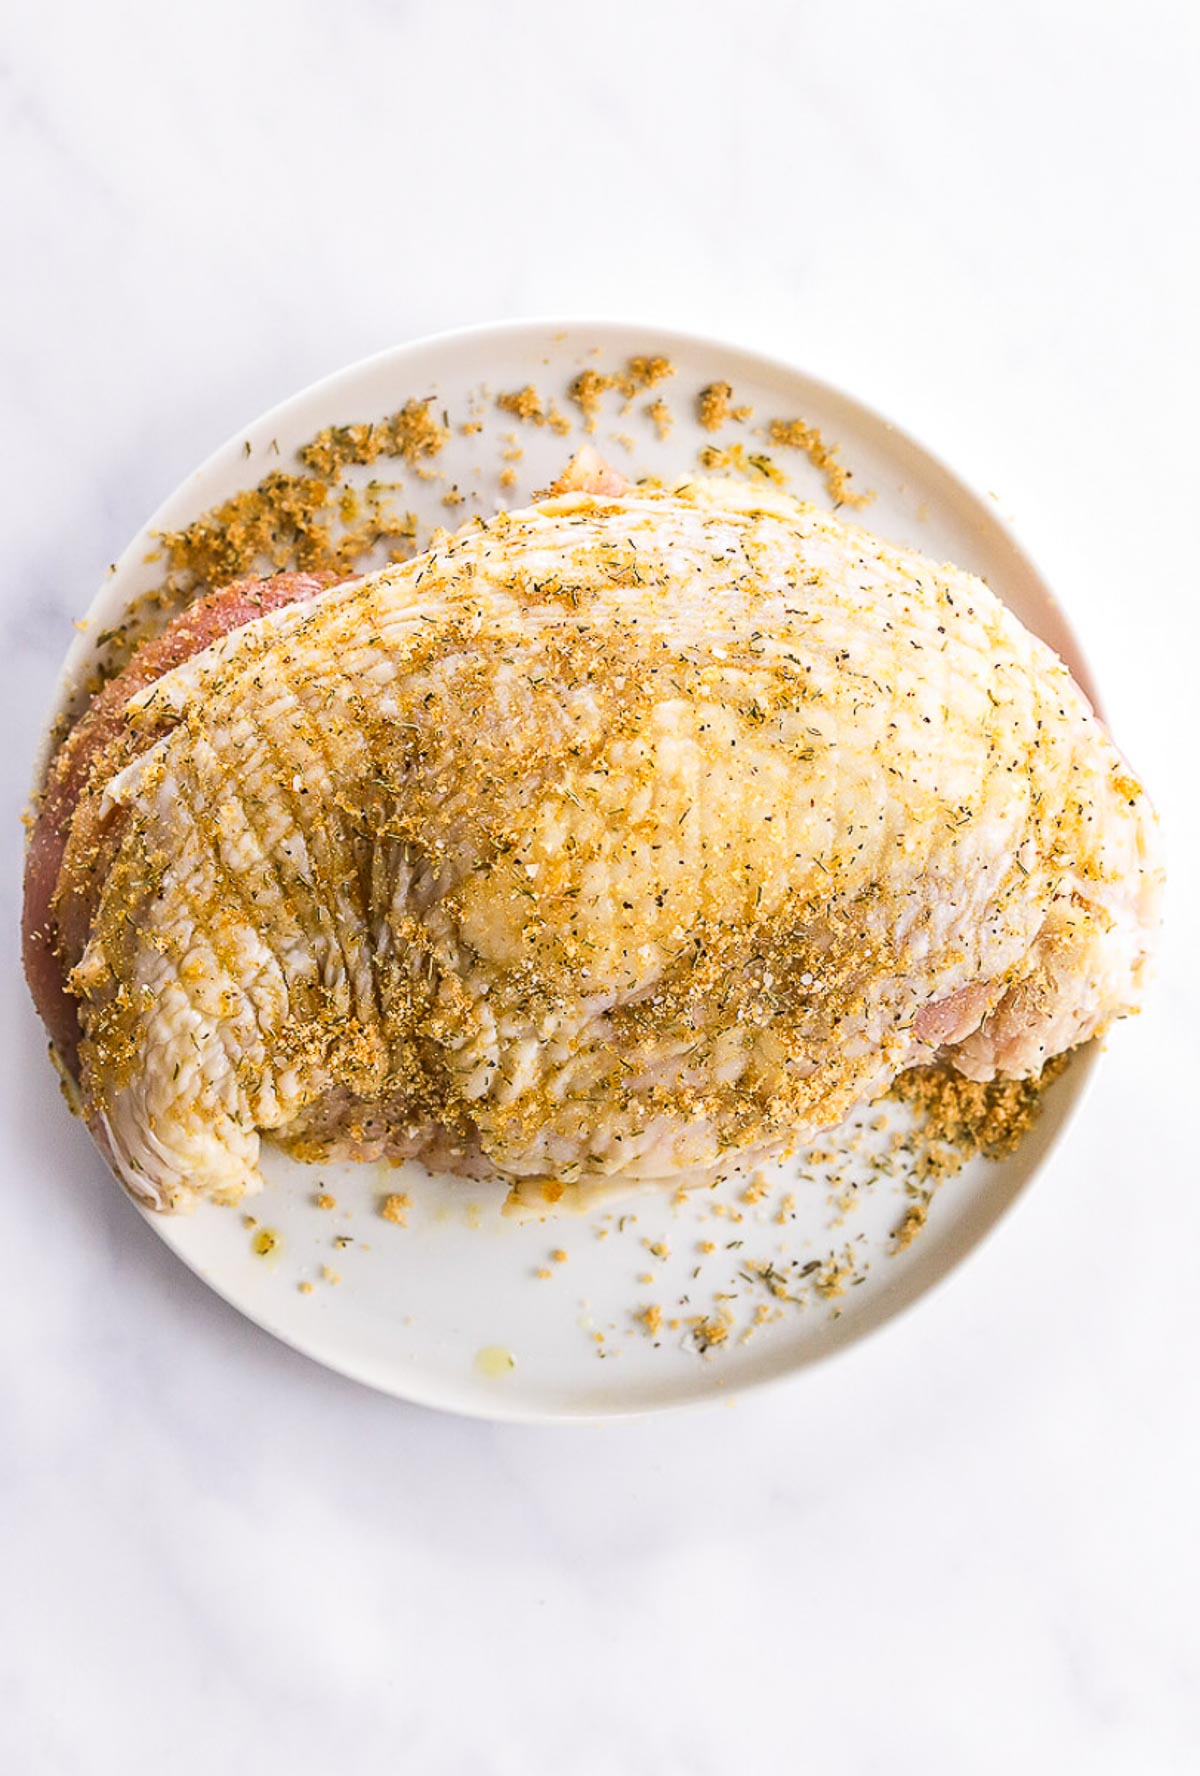 Turkey breast seasoned with dry rub on a plate.